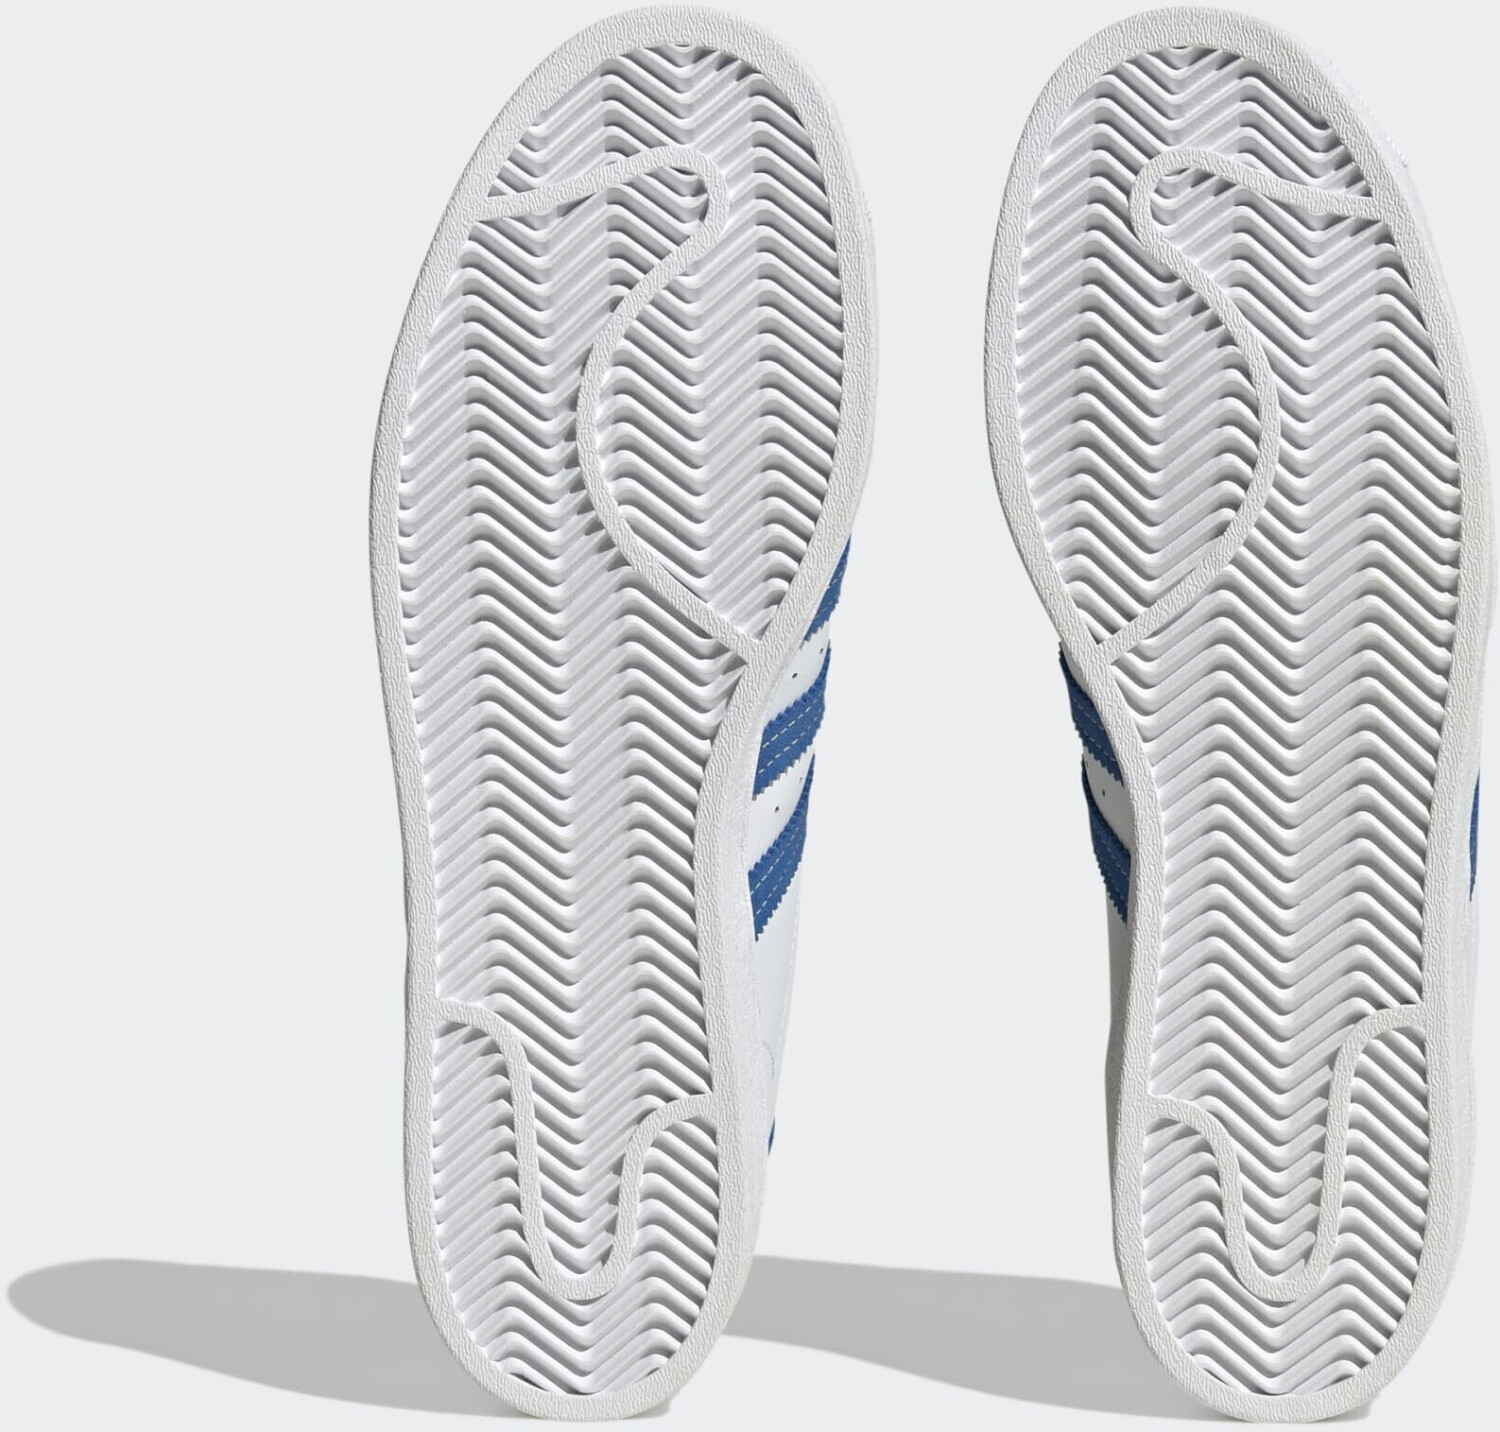 Adidas Superstar cloud white/sand strata/bright royal ab 77,59 € |  Preisvergleich bei